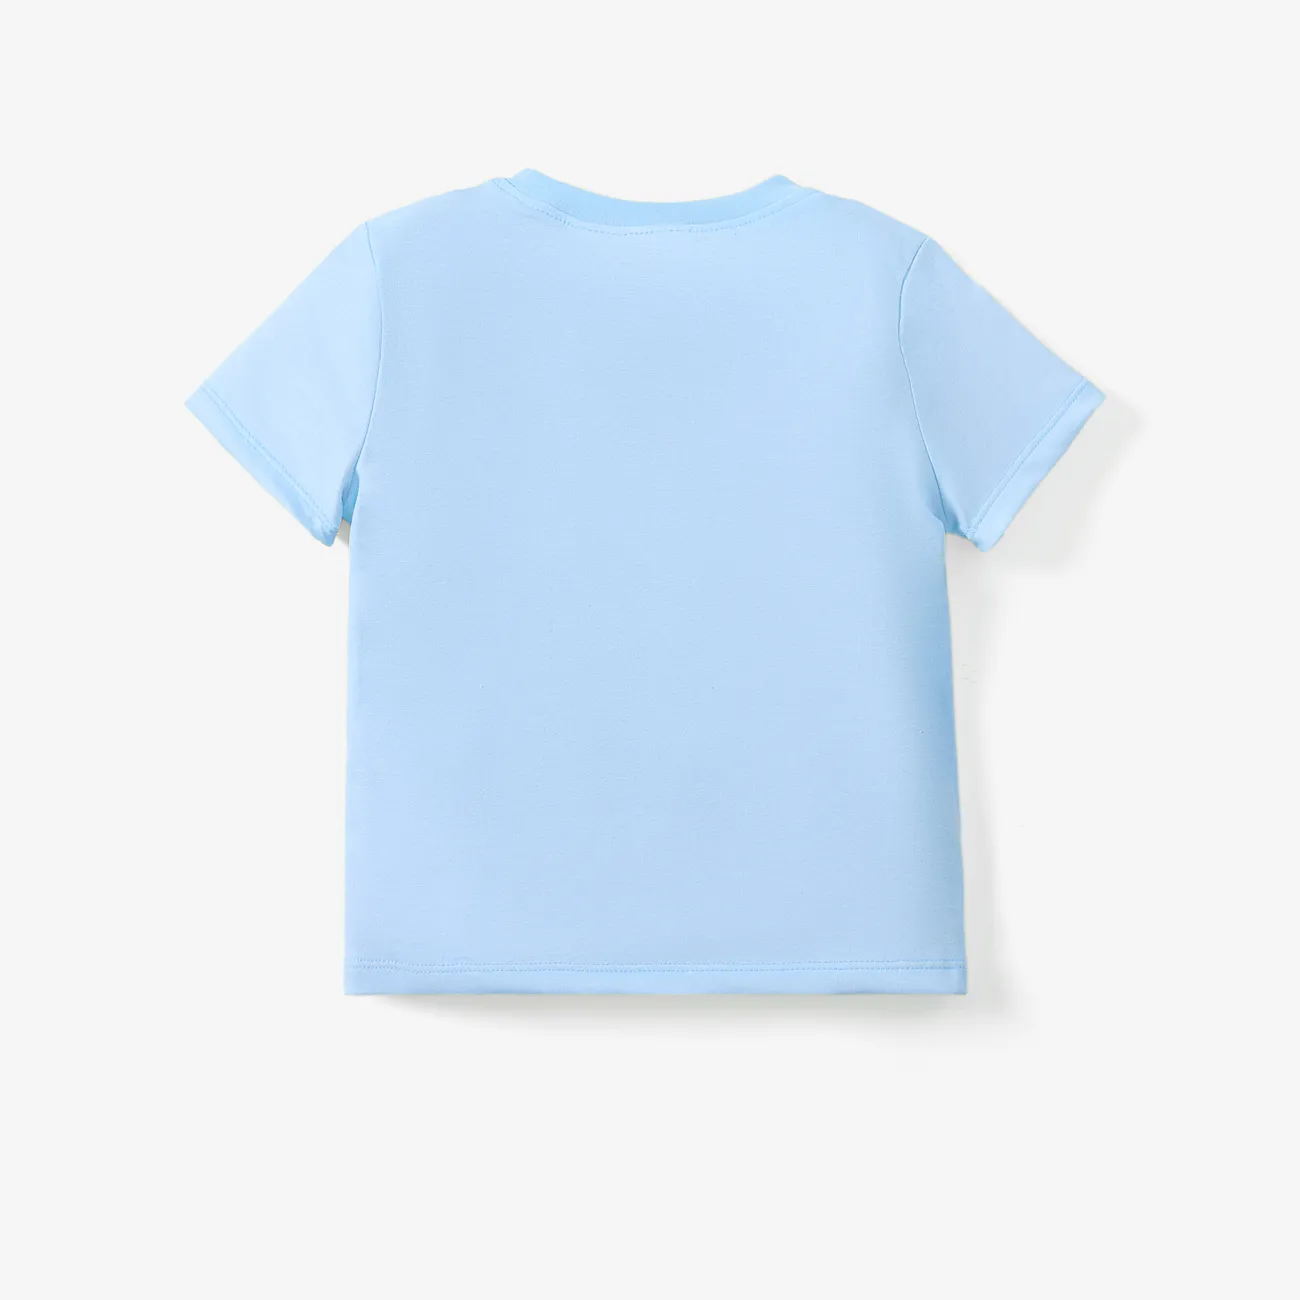 Disney Princess Moana/ Ariel/Belle 1pc Toddler Girls Naia™ Princess Slogan Character Print T-shirt Blue big image 1